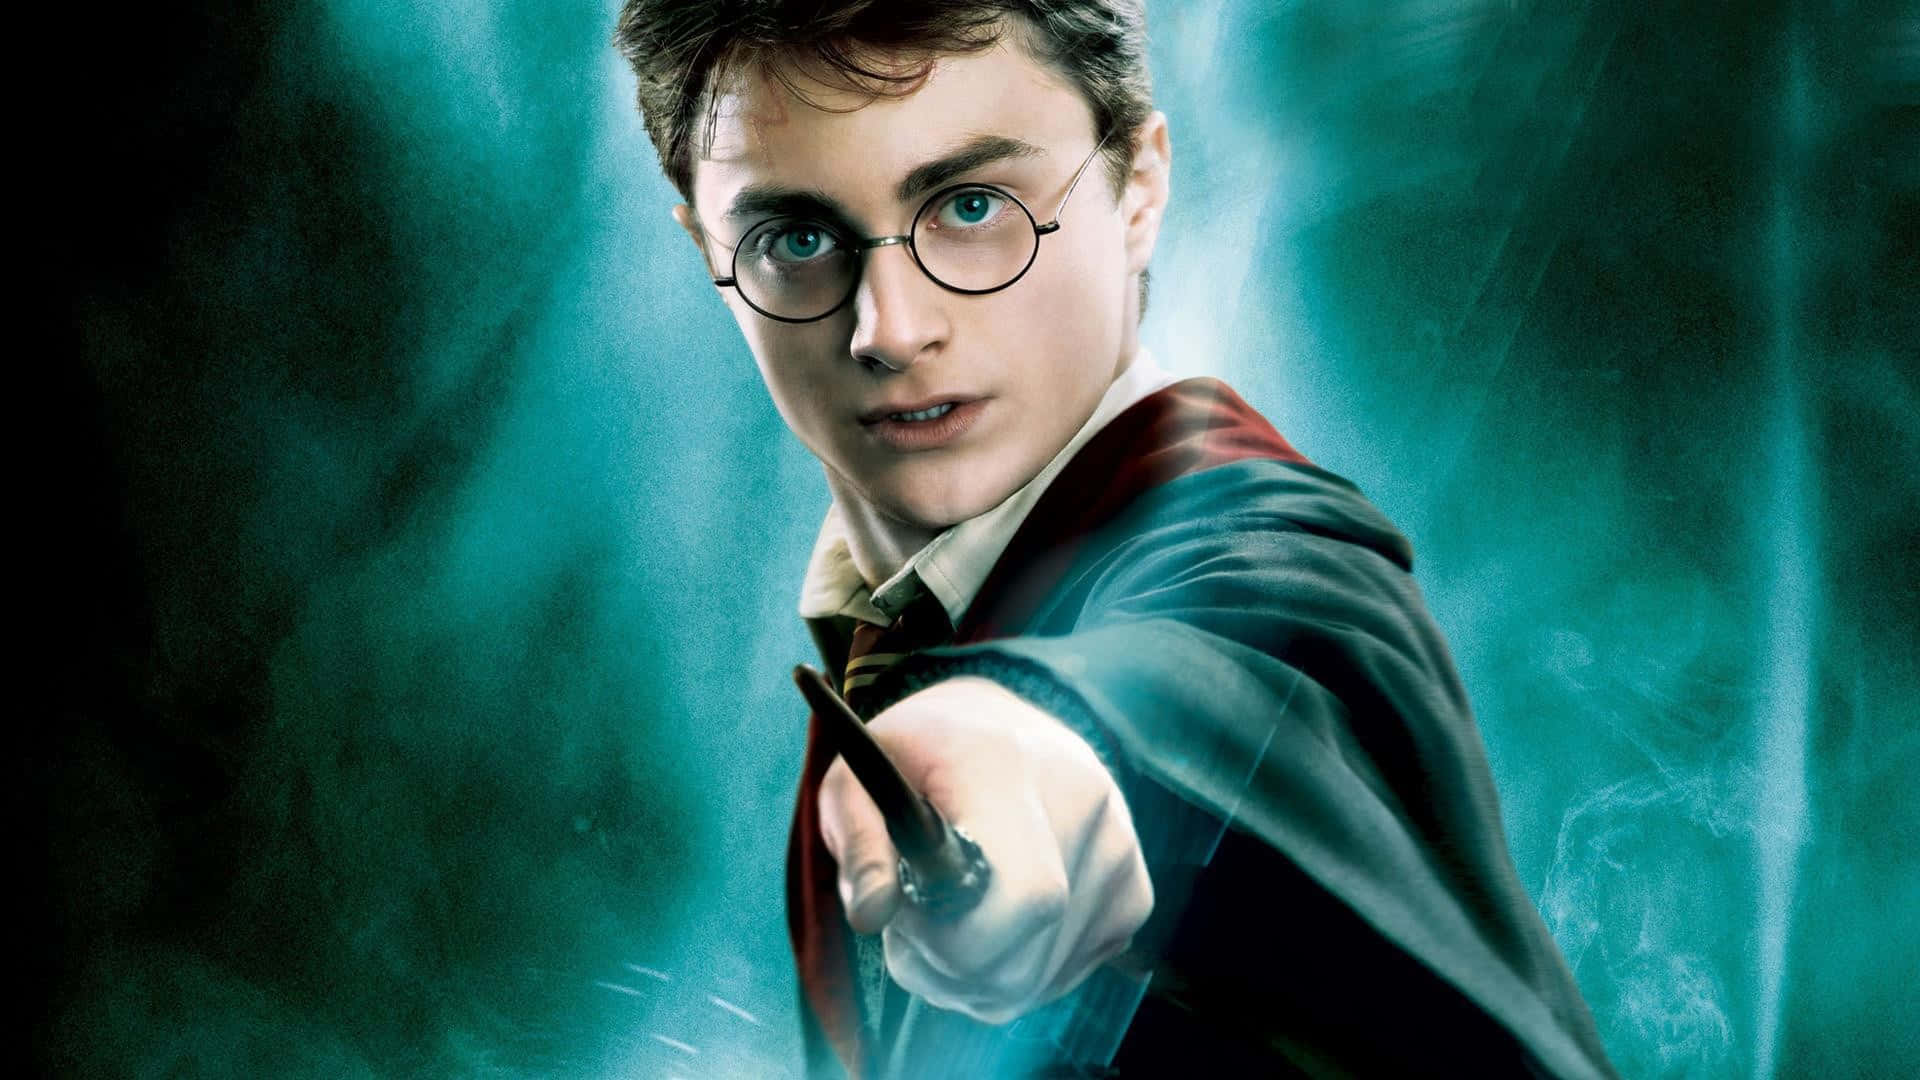 "Harry Potter's iconic profile"